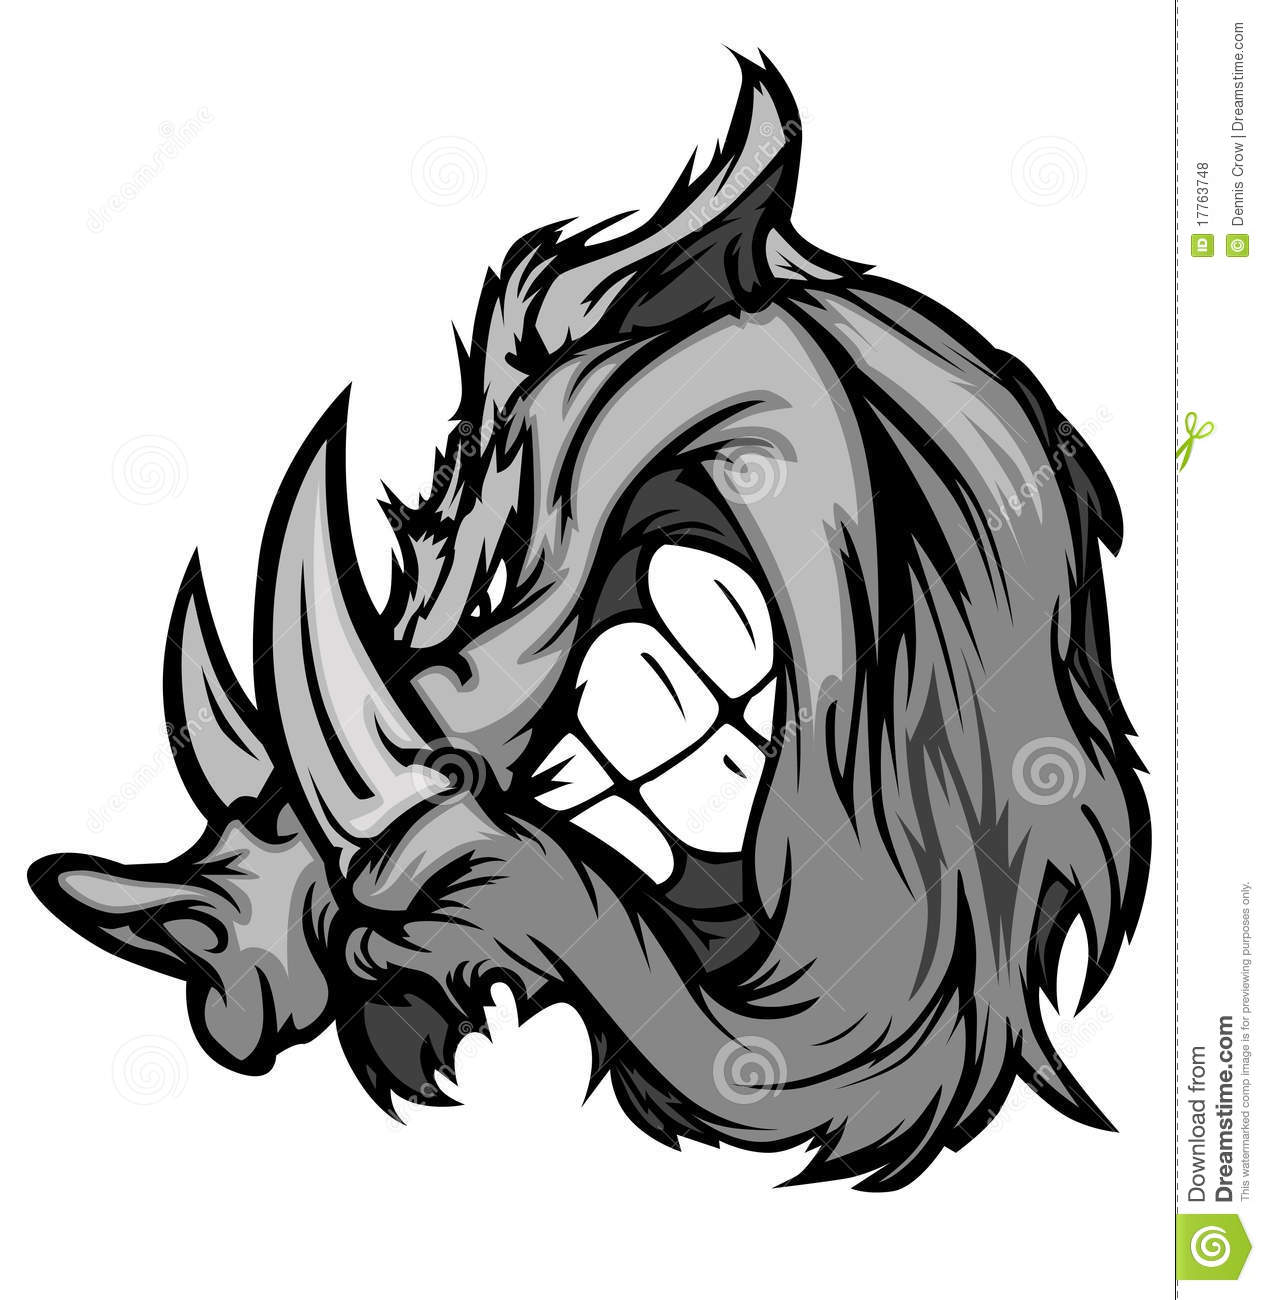 Boar Razorback Mascot Vector Logo Royalty Free Stock Photos   Image